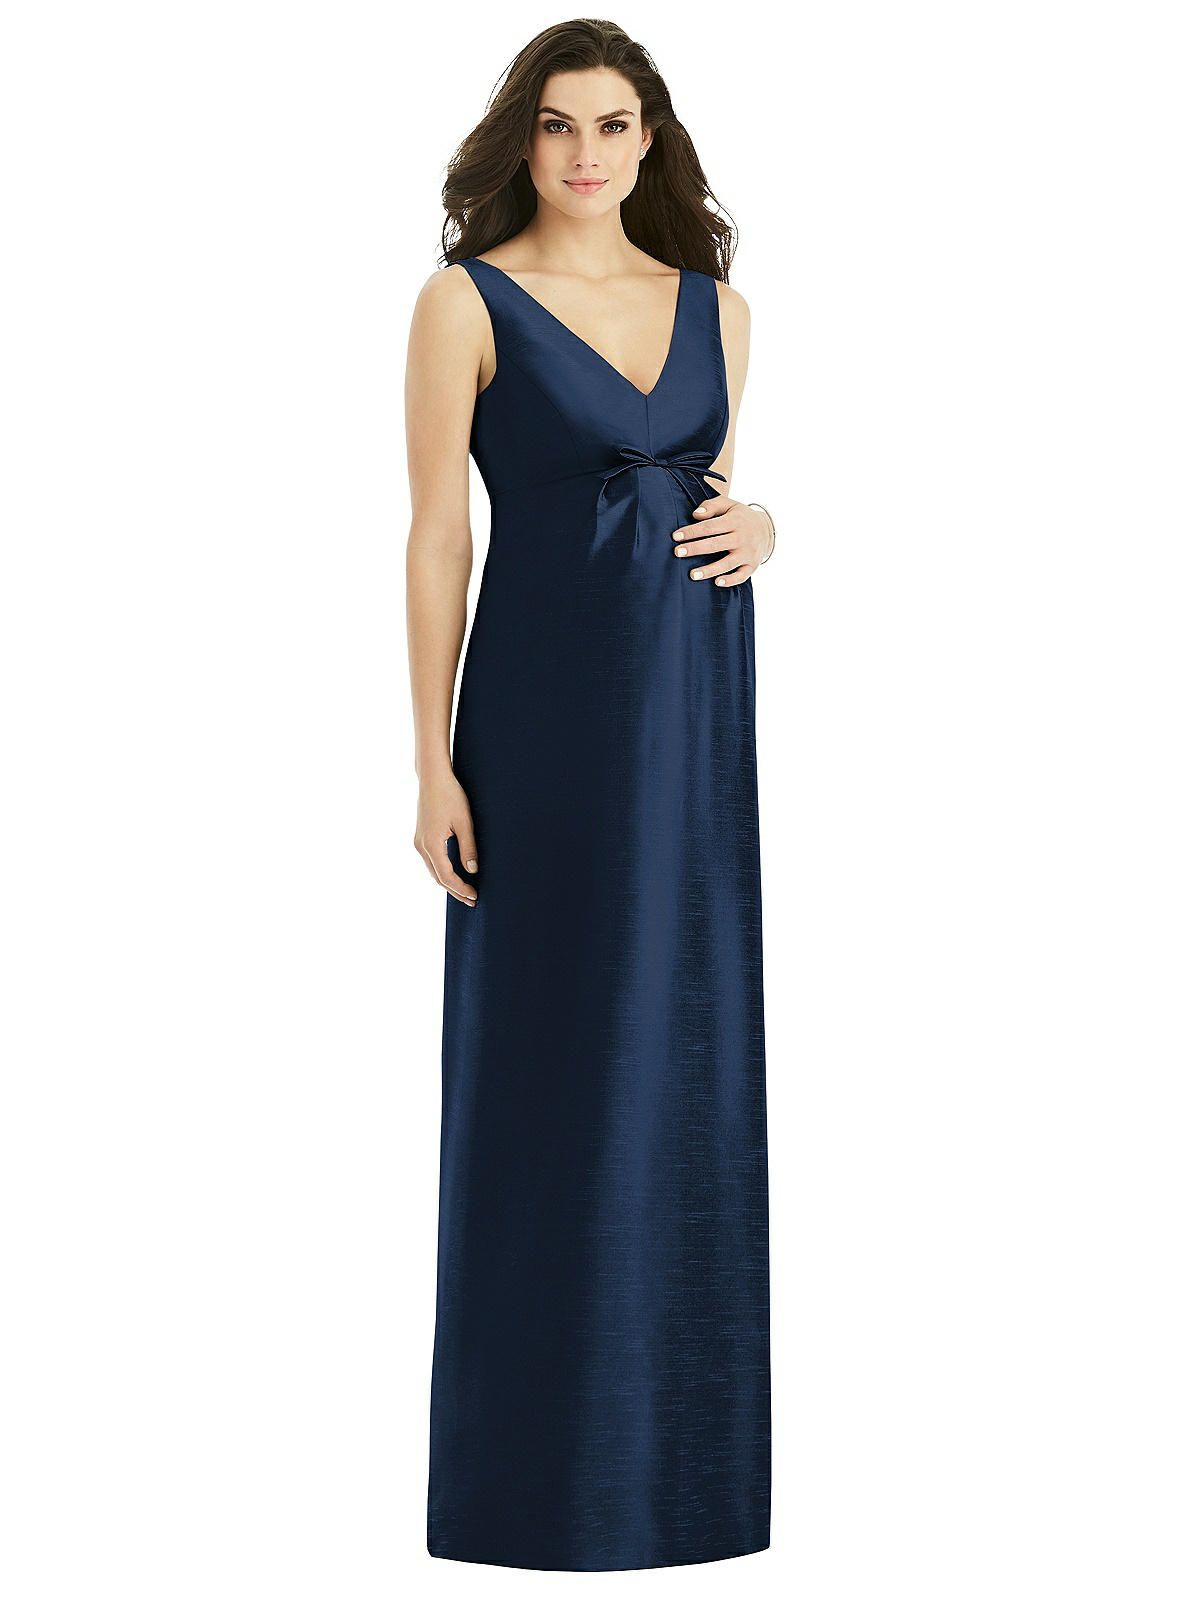 Sleeveless Satin Twill Maternity Dress in Midnight Navy | The Dessy Group